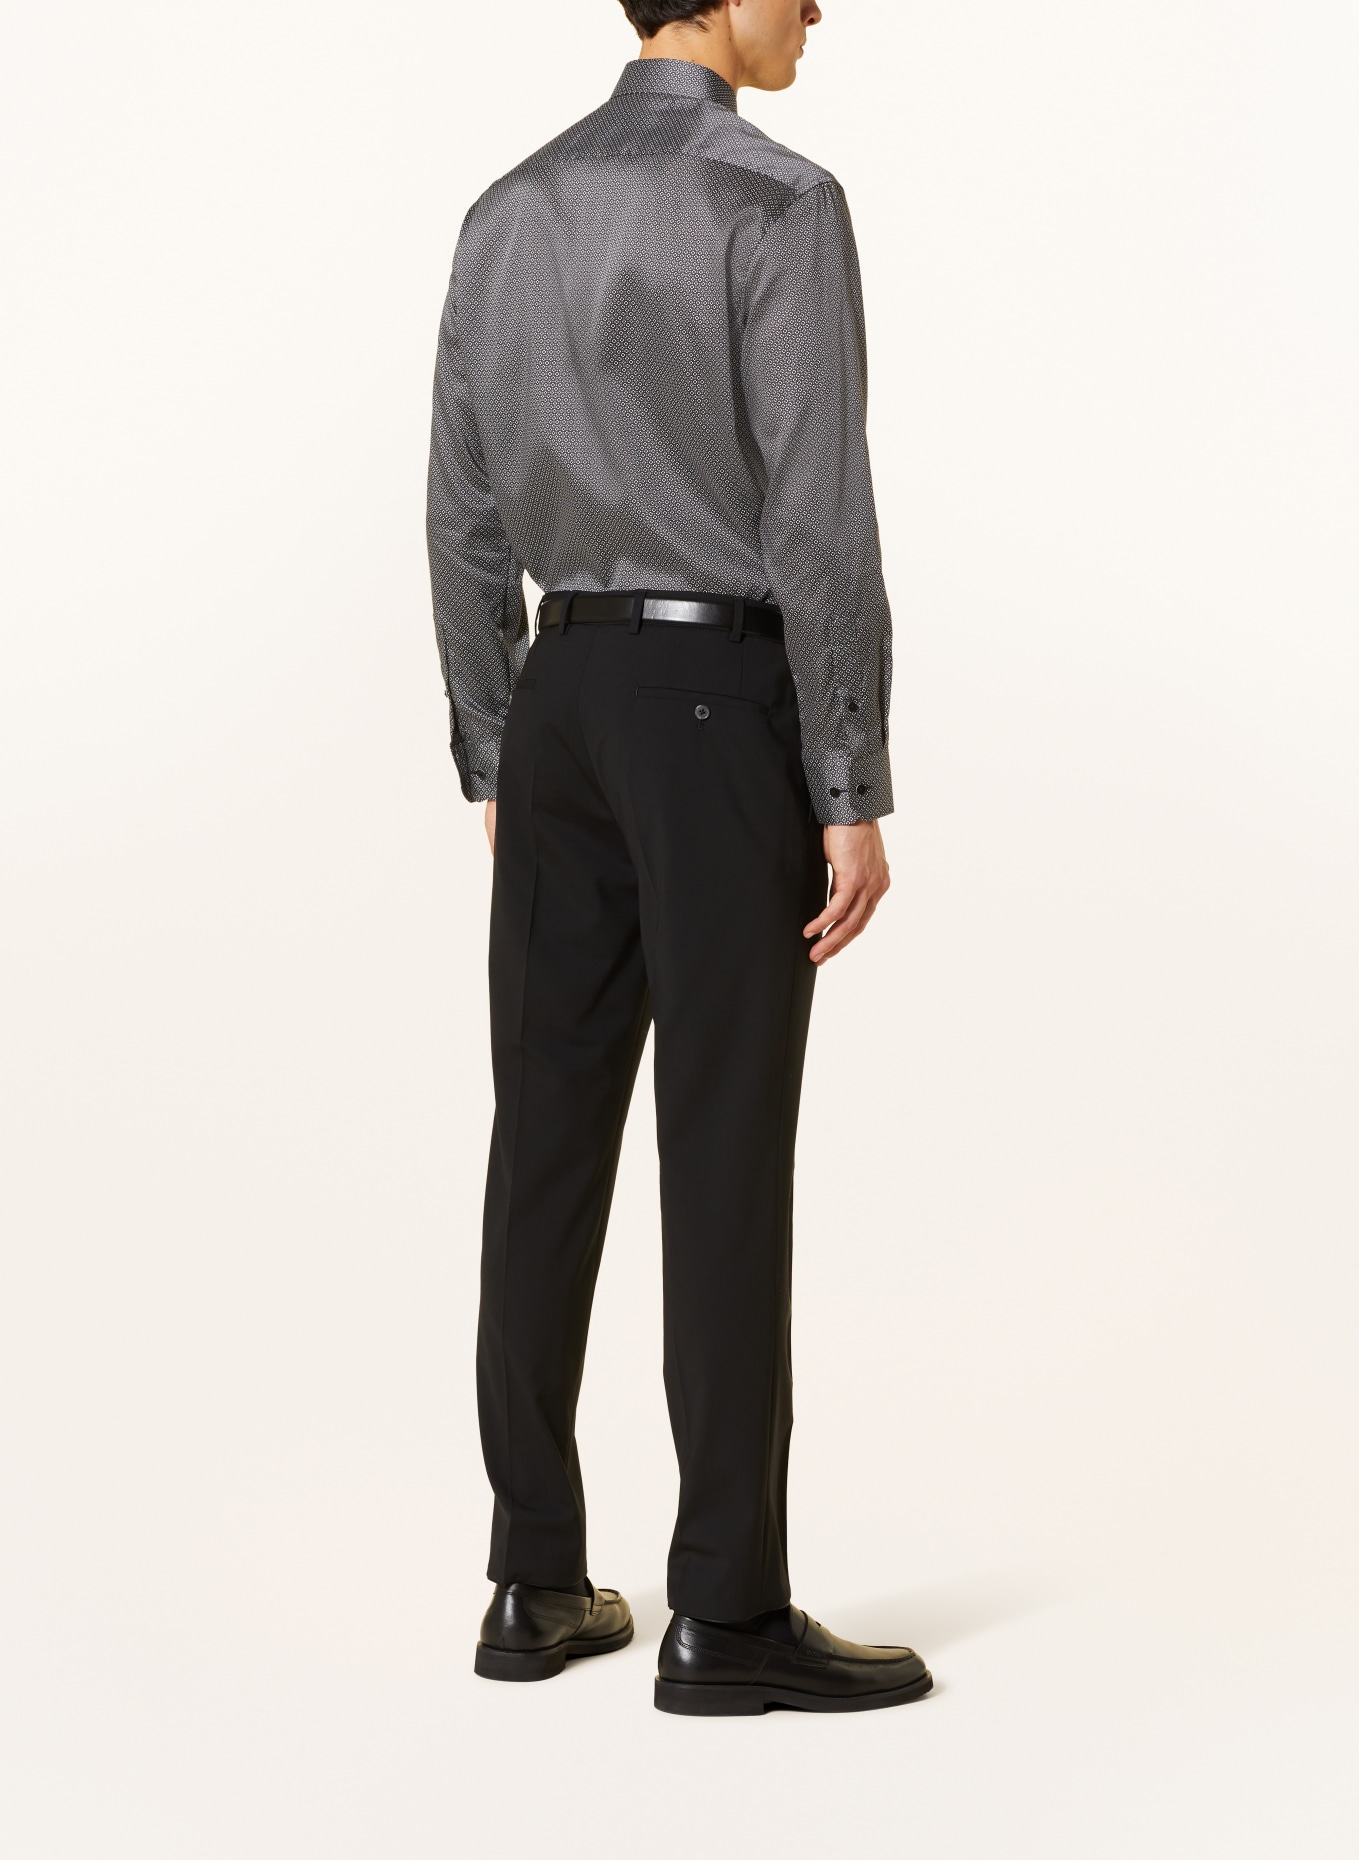 ETERNA Hemd Modern Fit in schwarz/ weiss/ grau